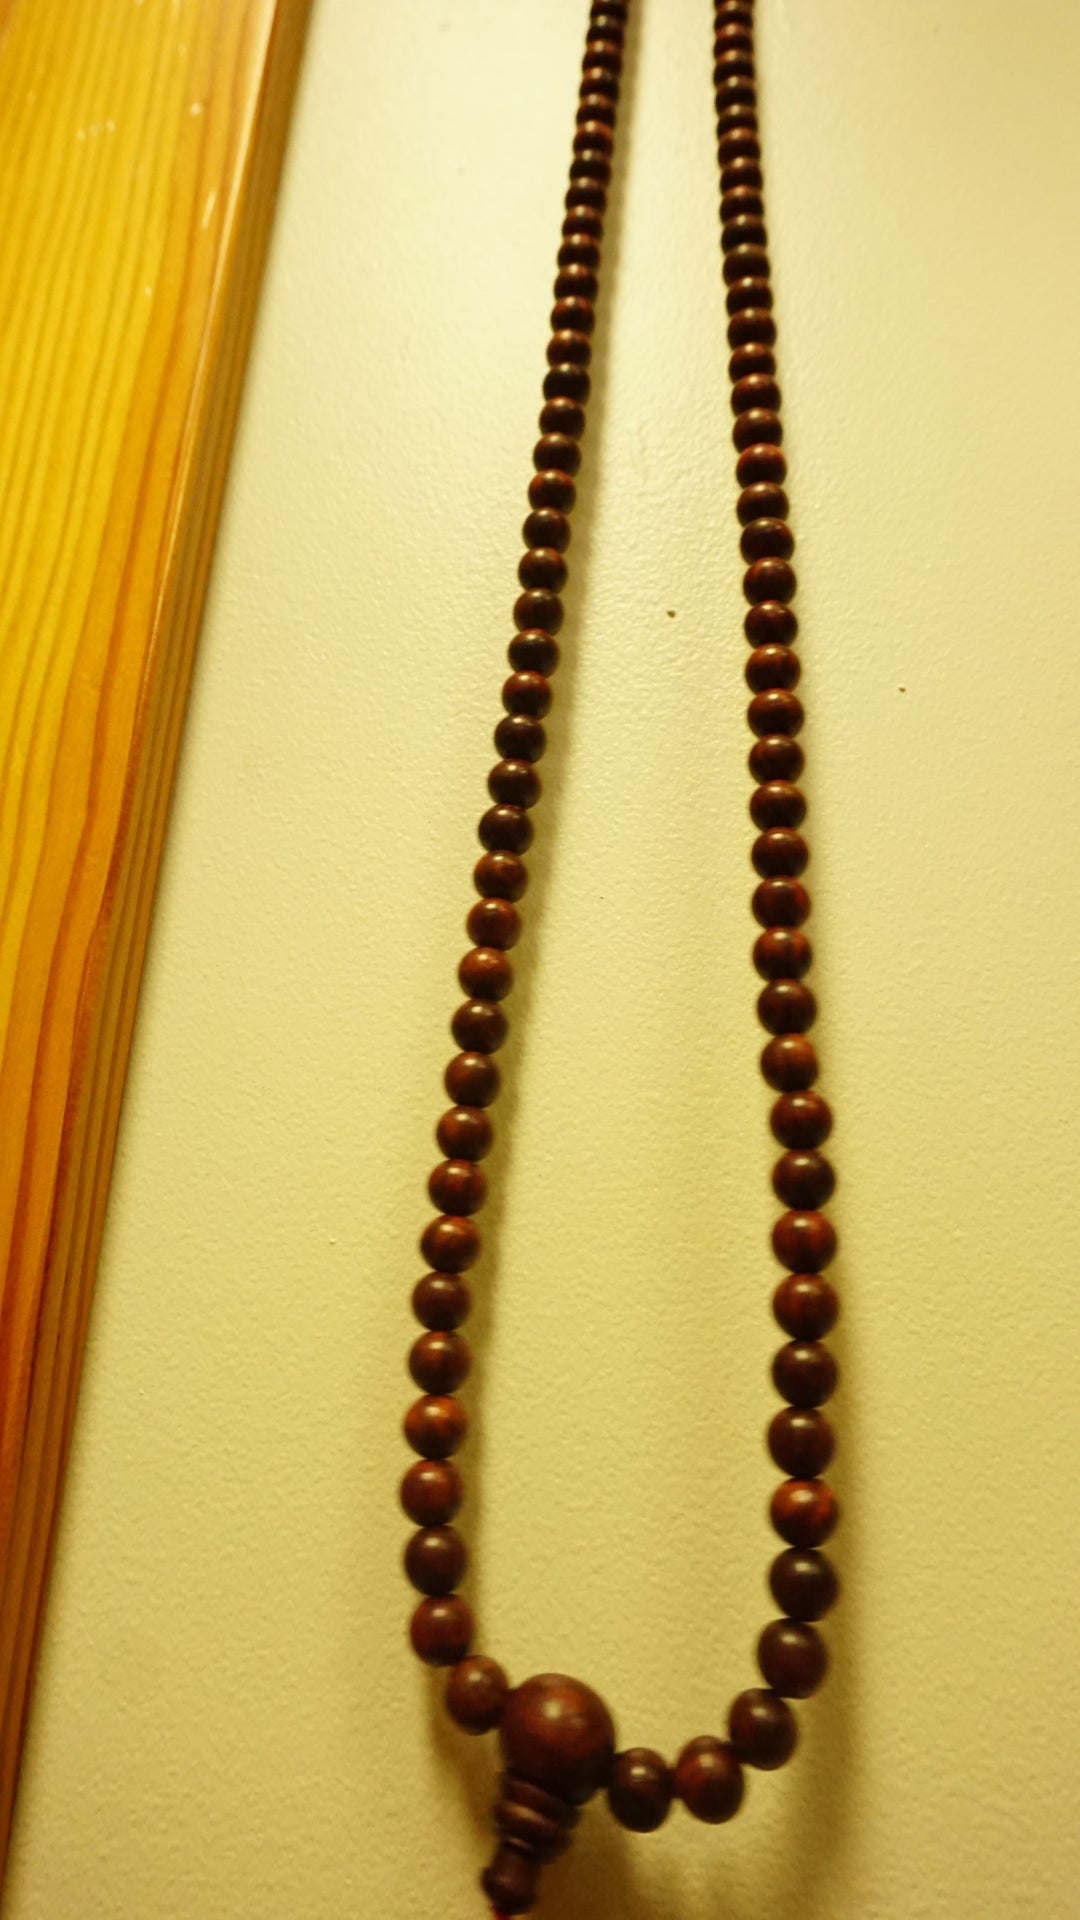 Large Red Sandelwood Mala Beads